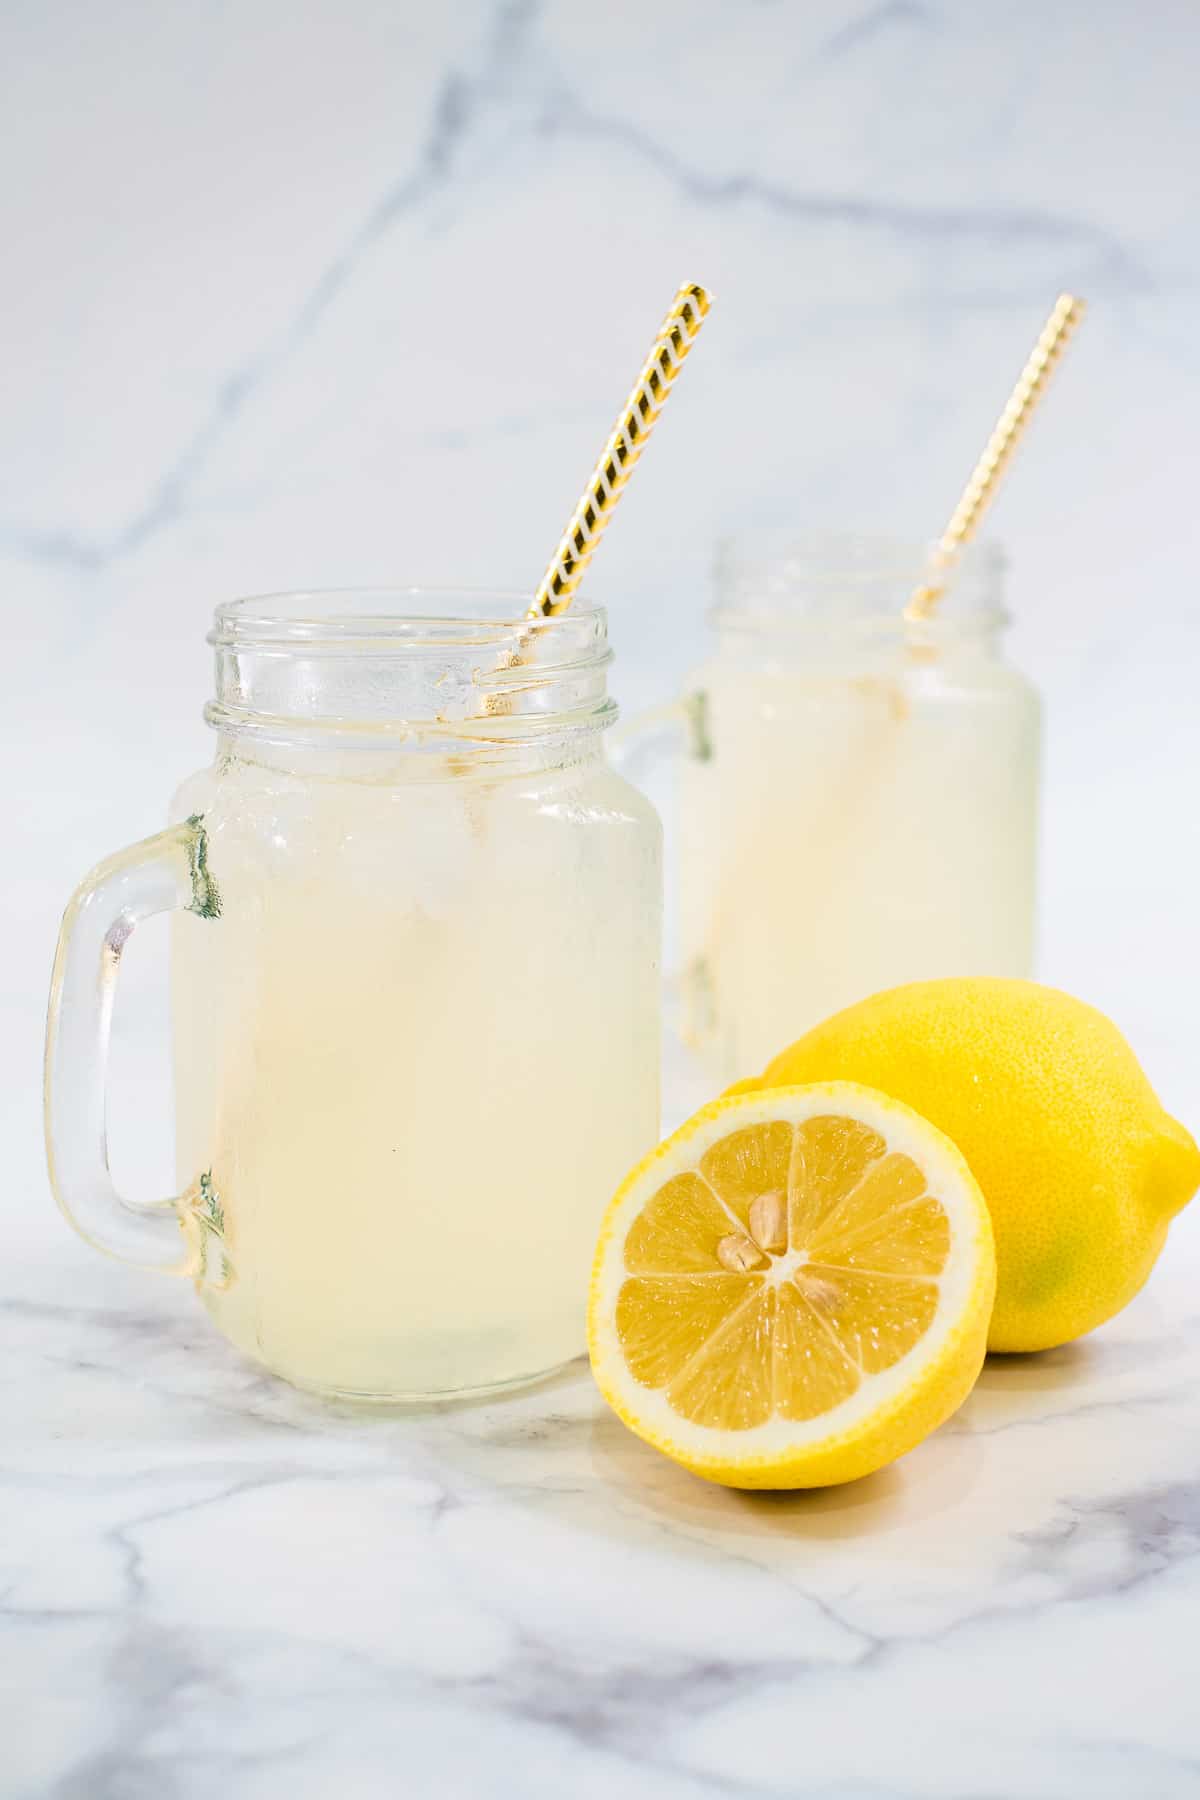 2 glasses of lemonade with straw it them